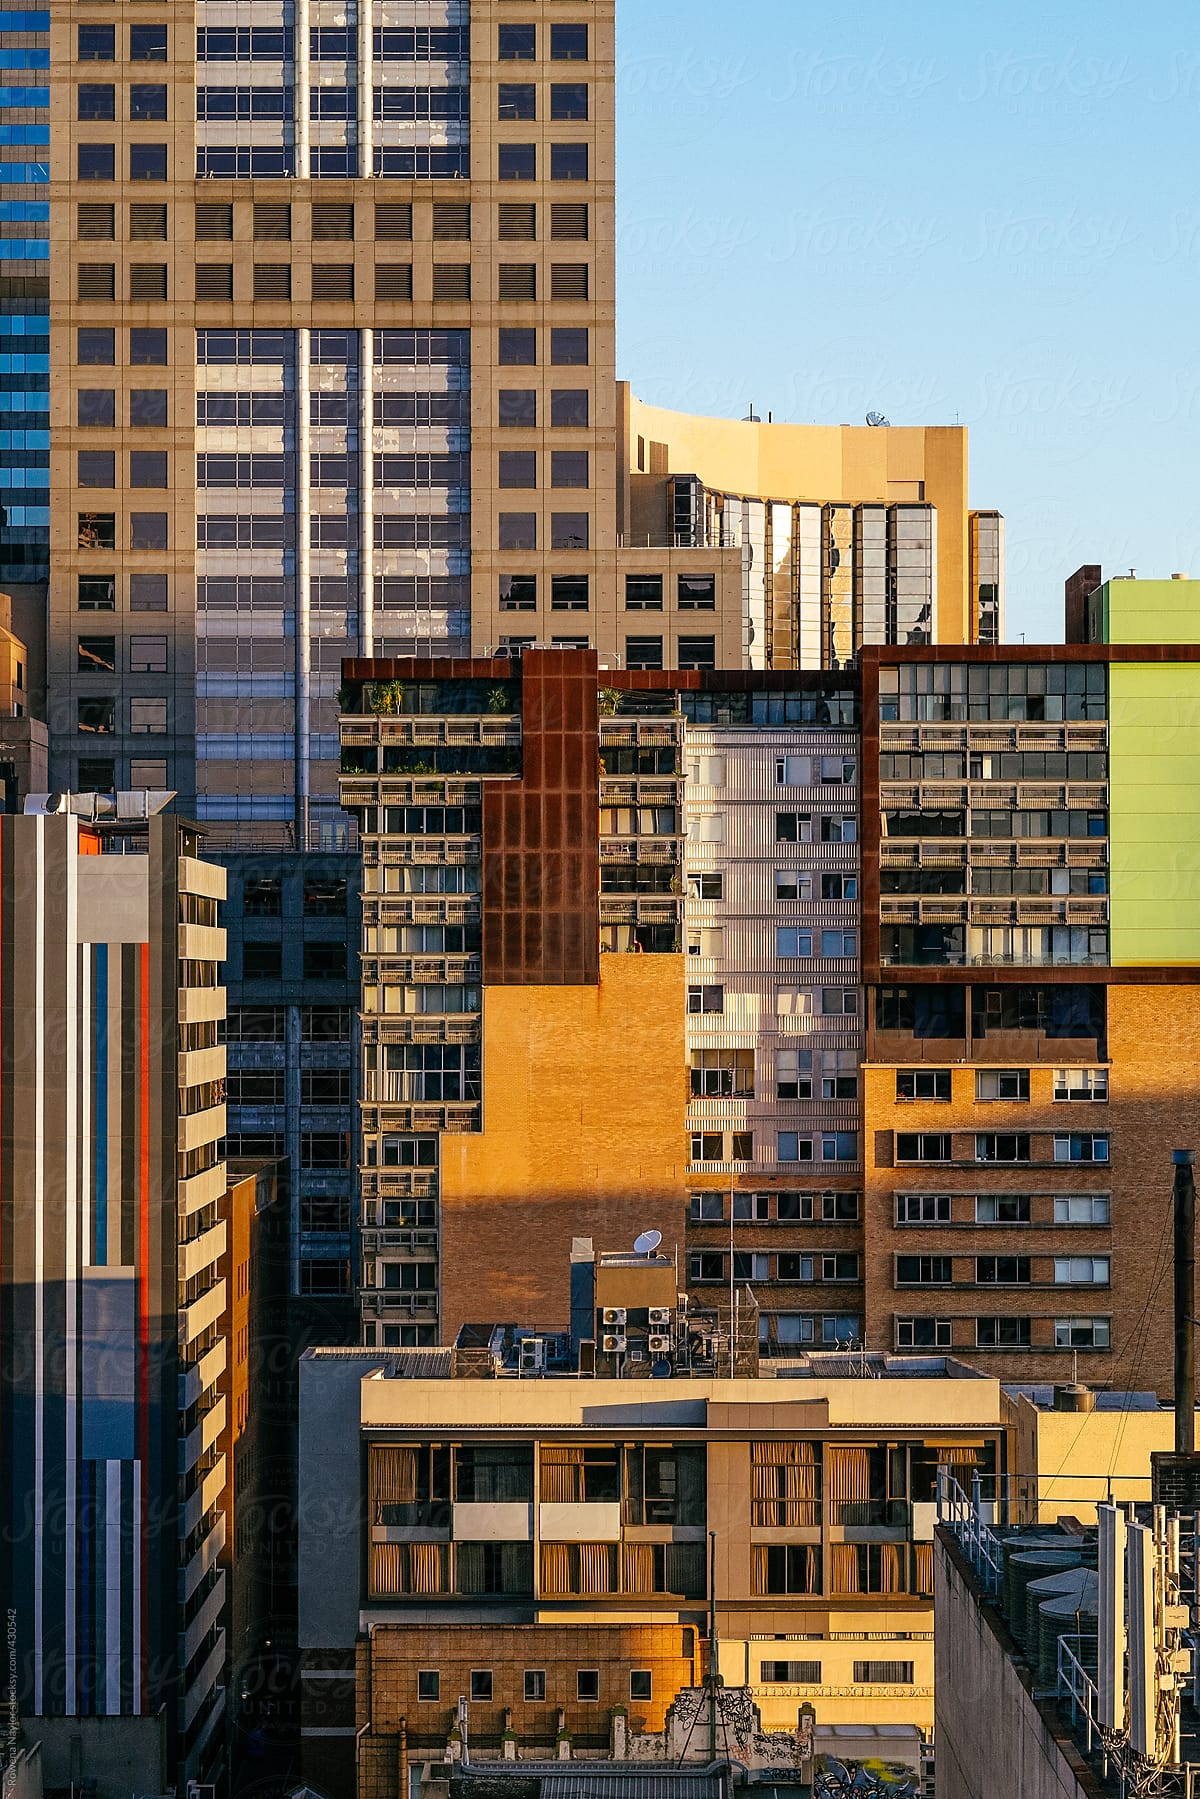 Hi-density living in the city